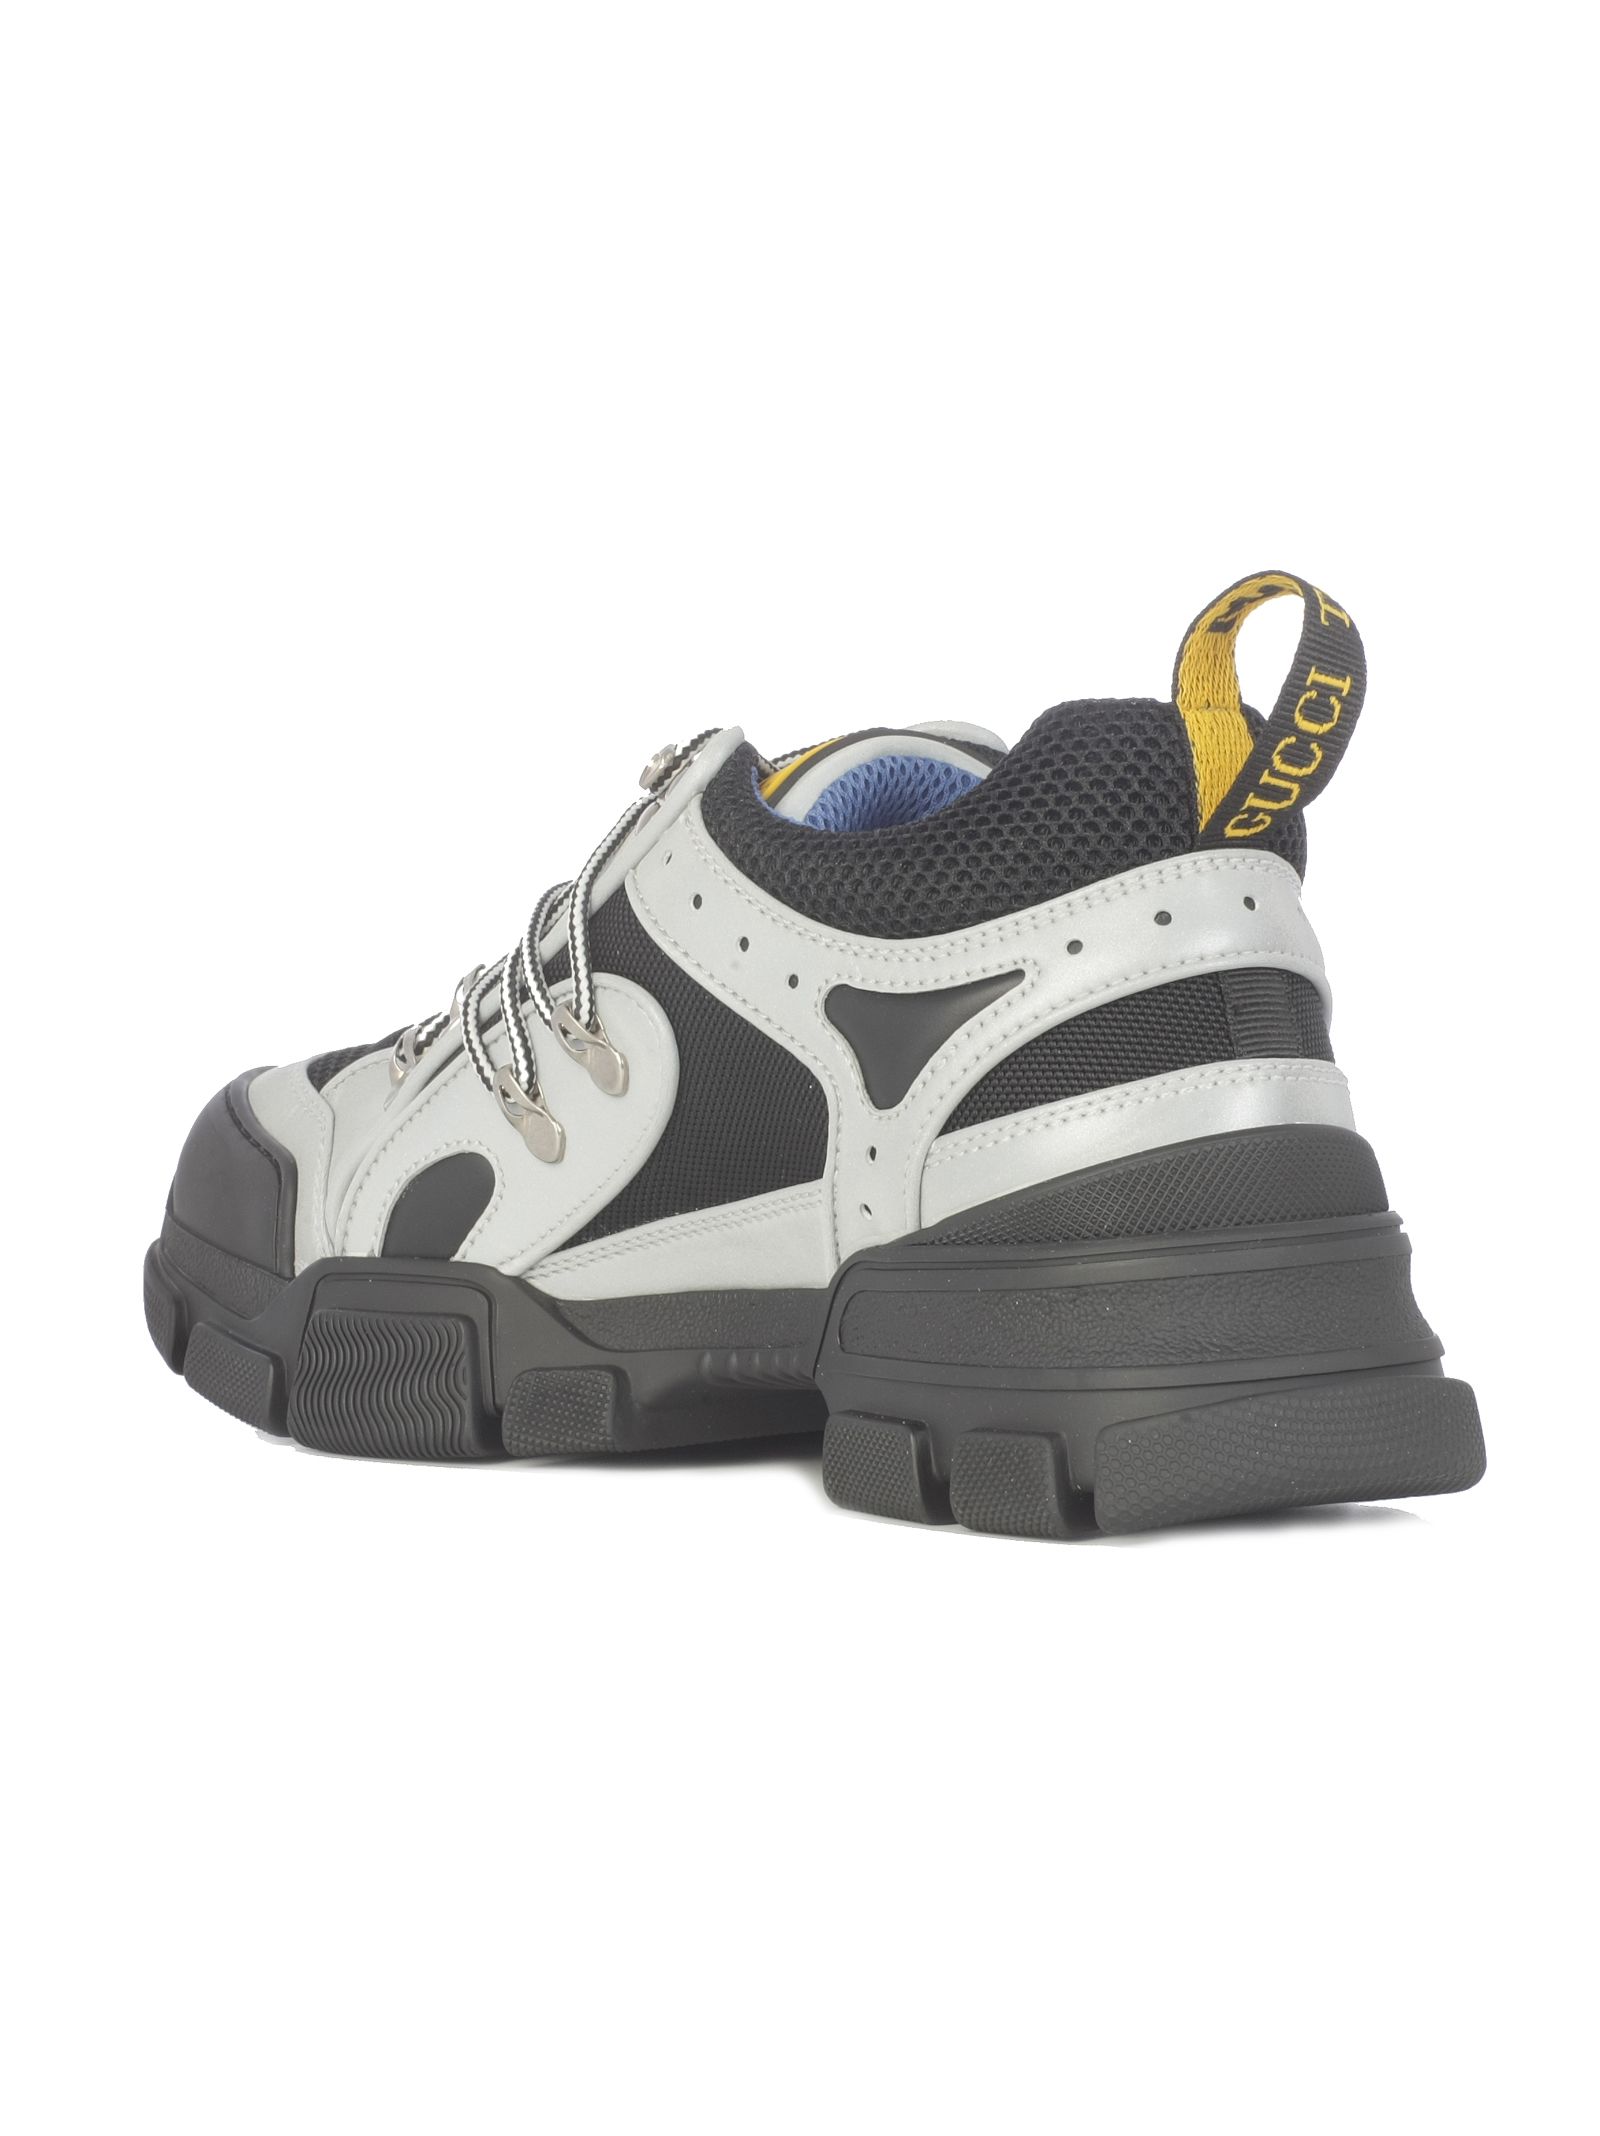 Gucci Gucci Flashtrek Hiking Sneakers - Silver Black - 10785198 | italist